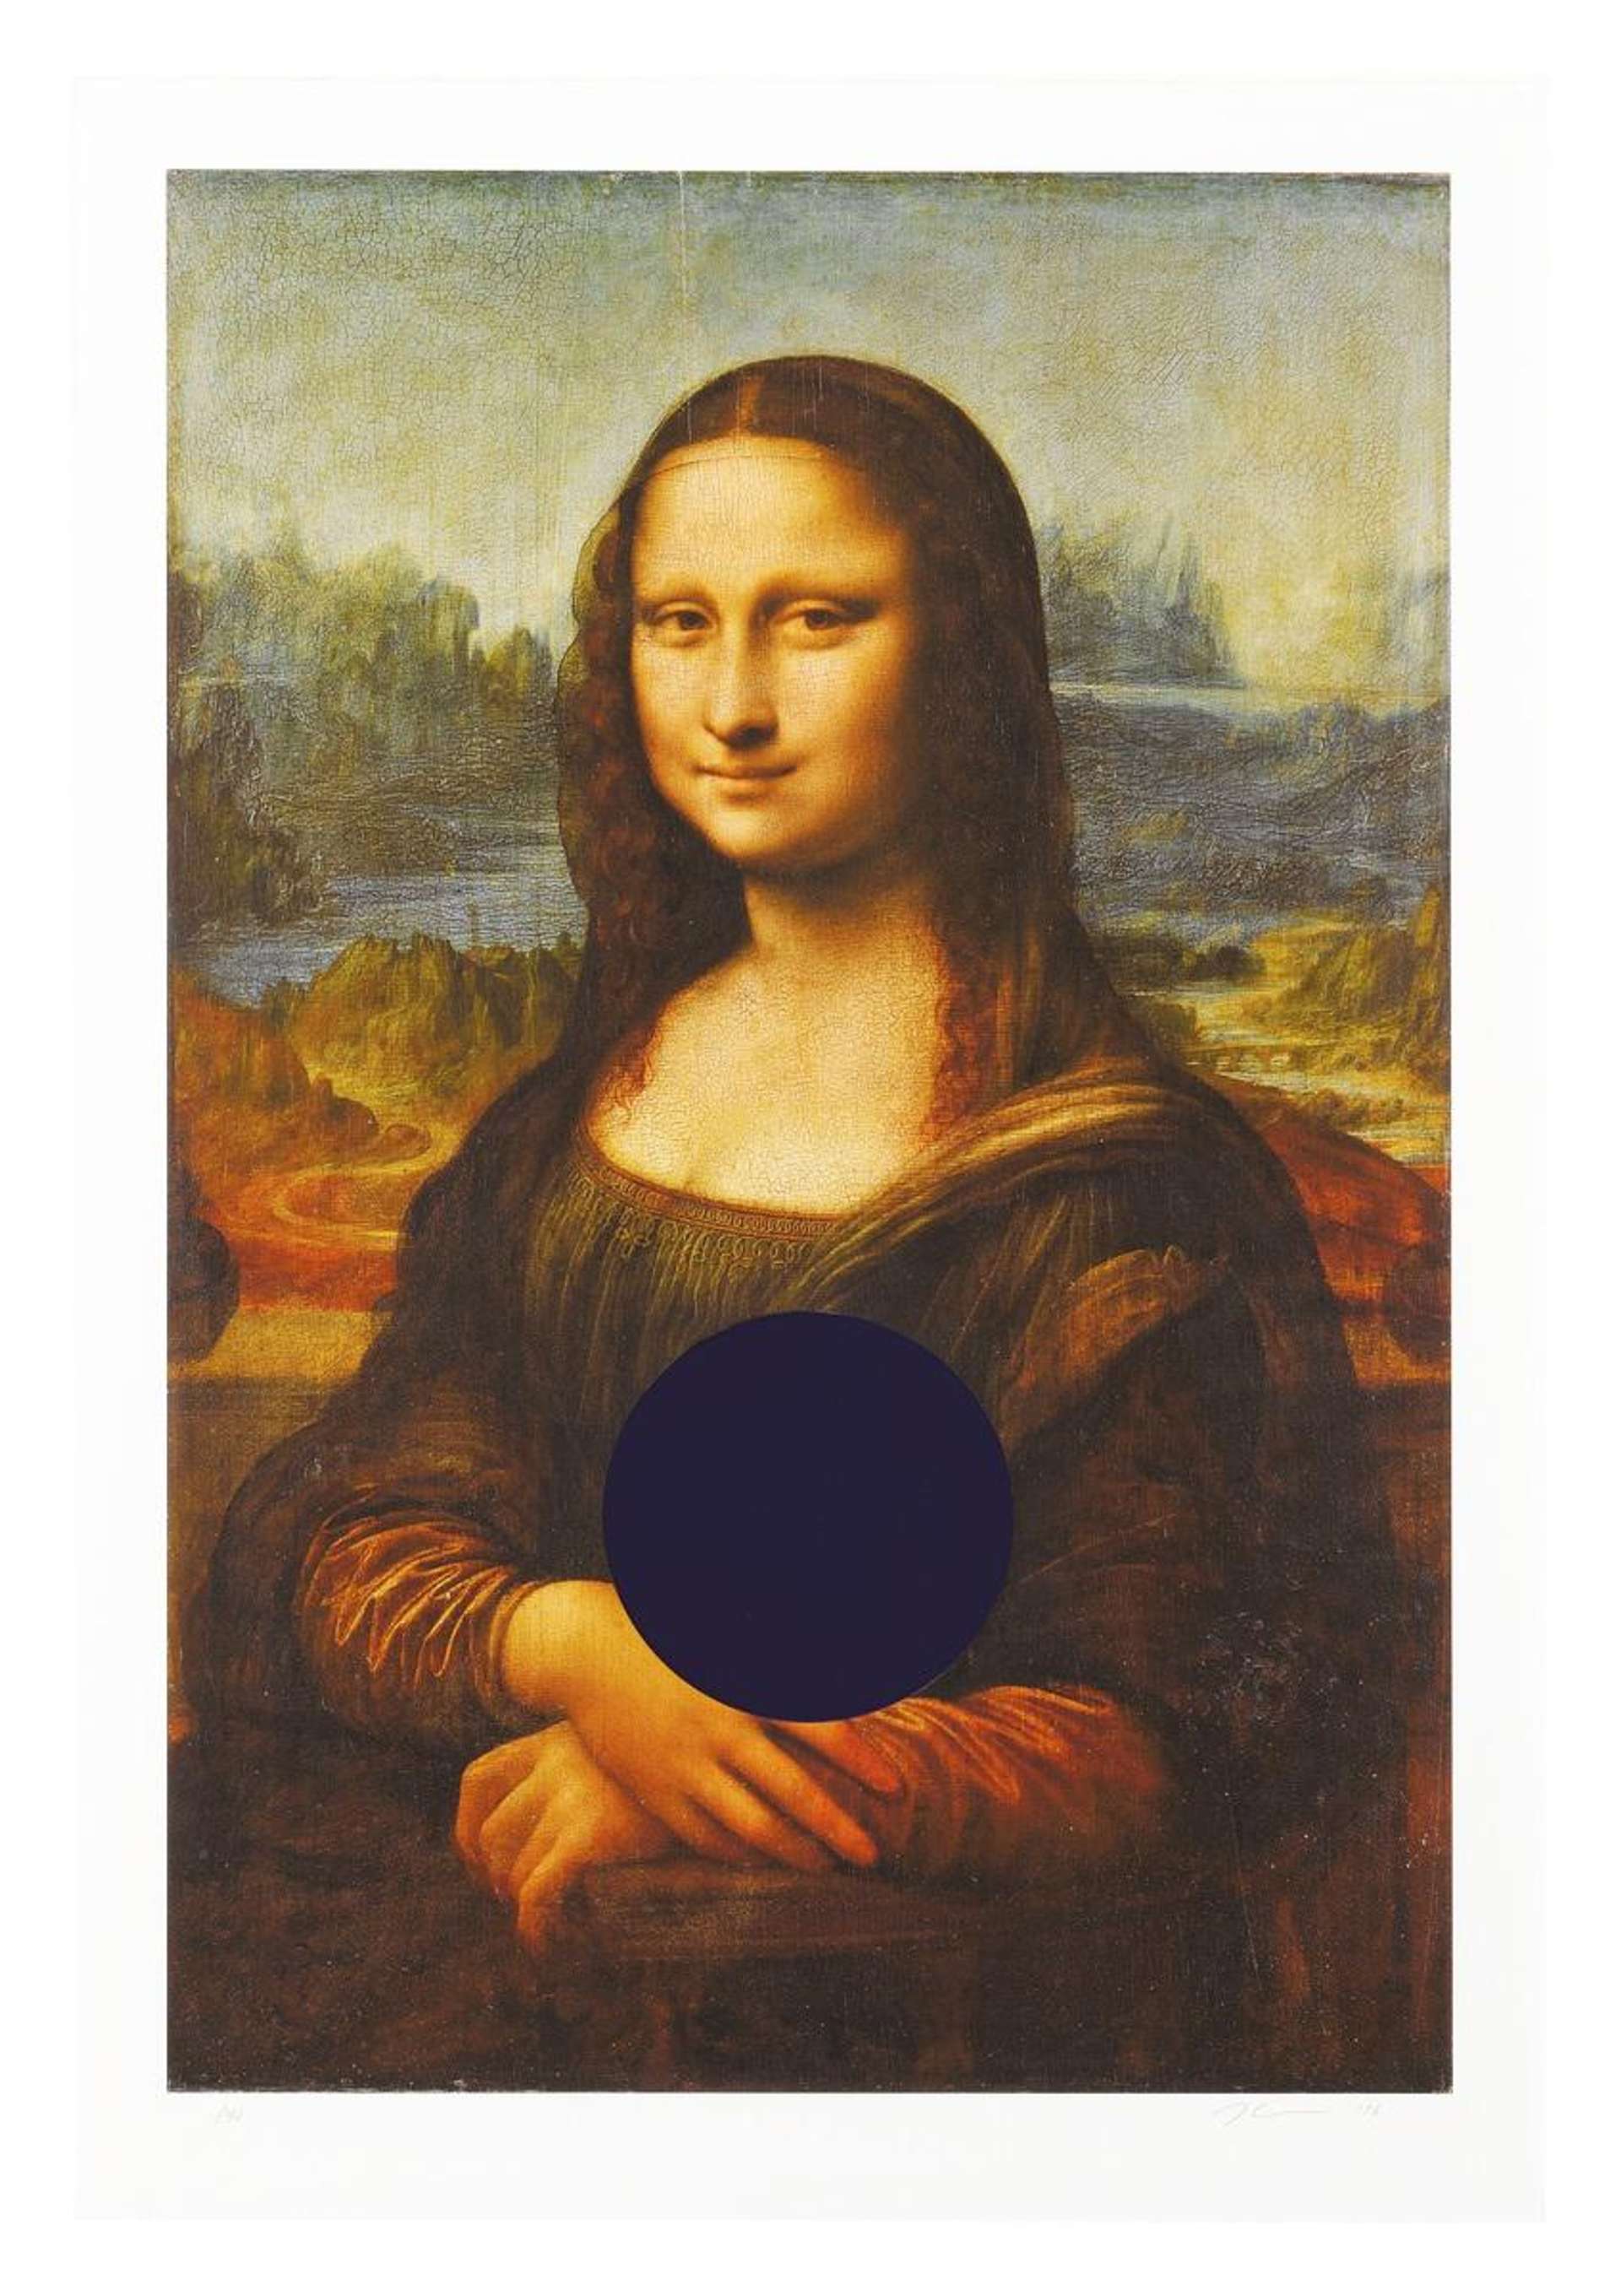 Gazing Ball (Da Vinci Mona Lisa) - Signed Print by Jeff Koons 2016 - MyArtBroker